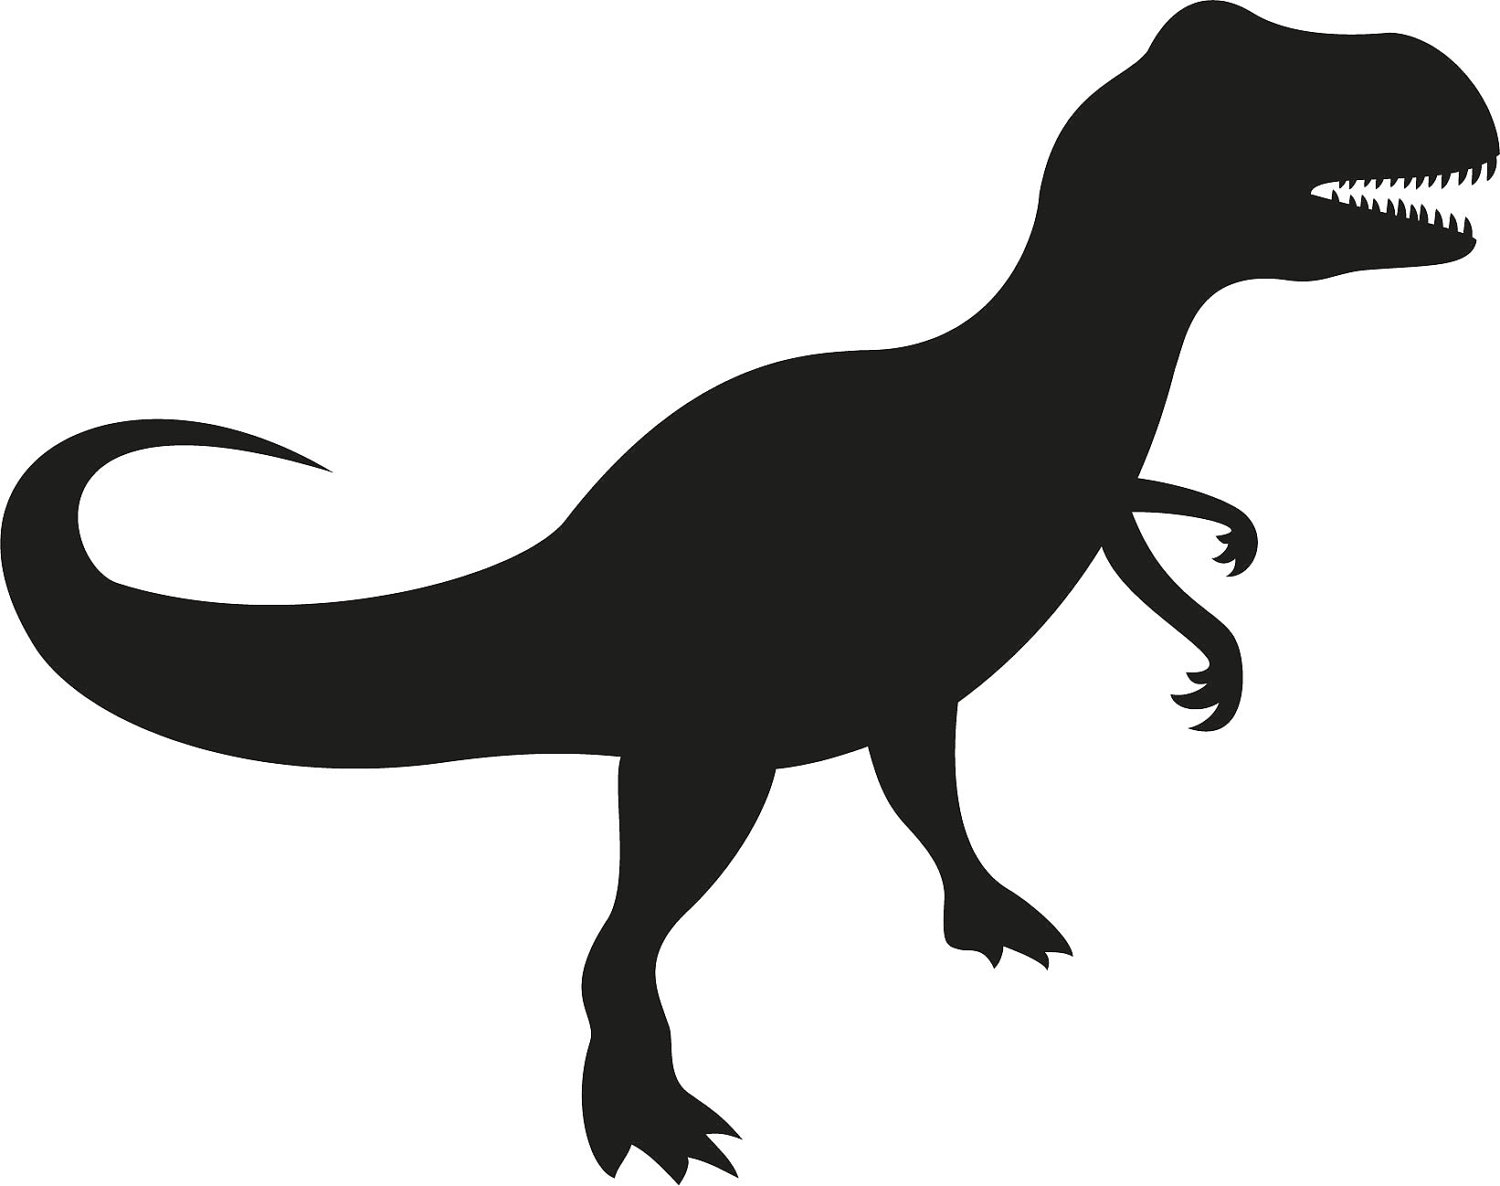 T rex clipart black and white - ClipartFox